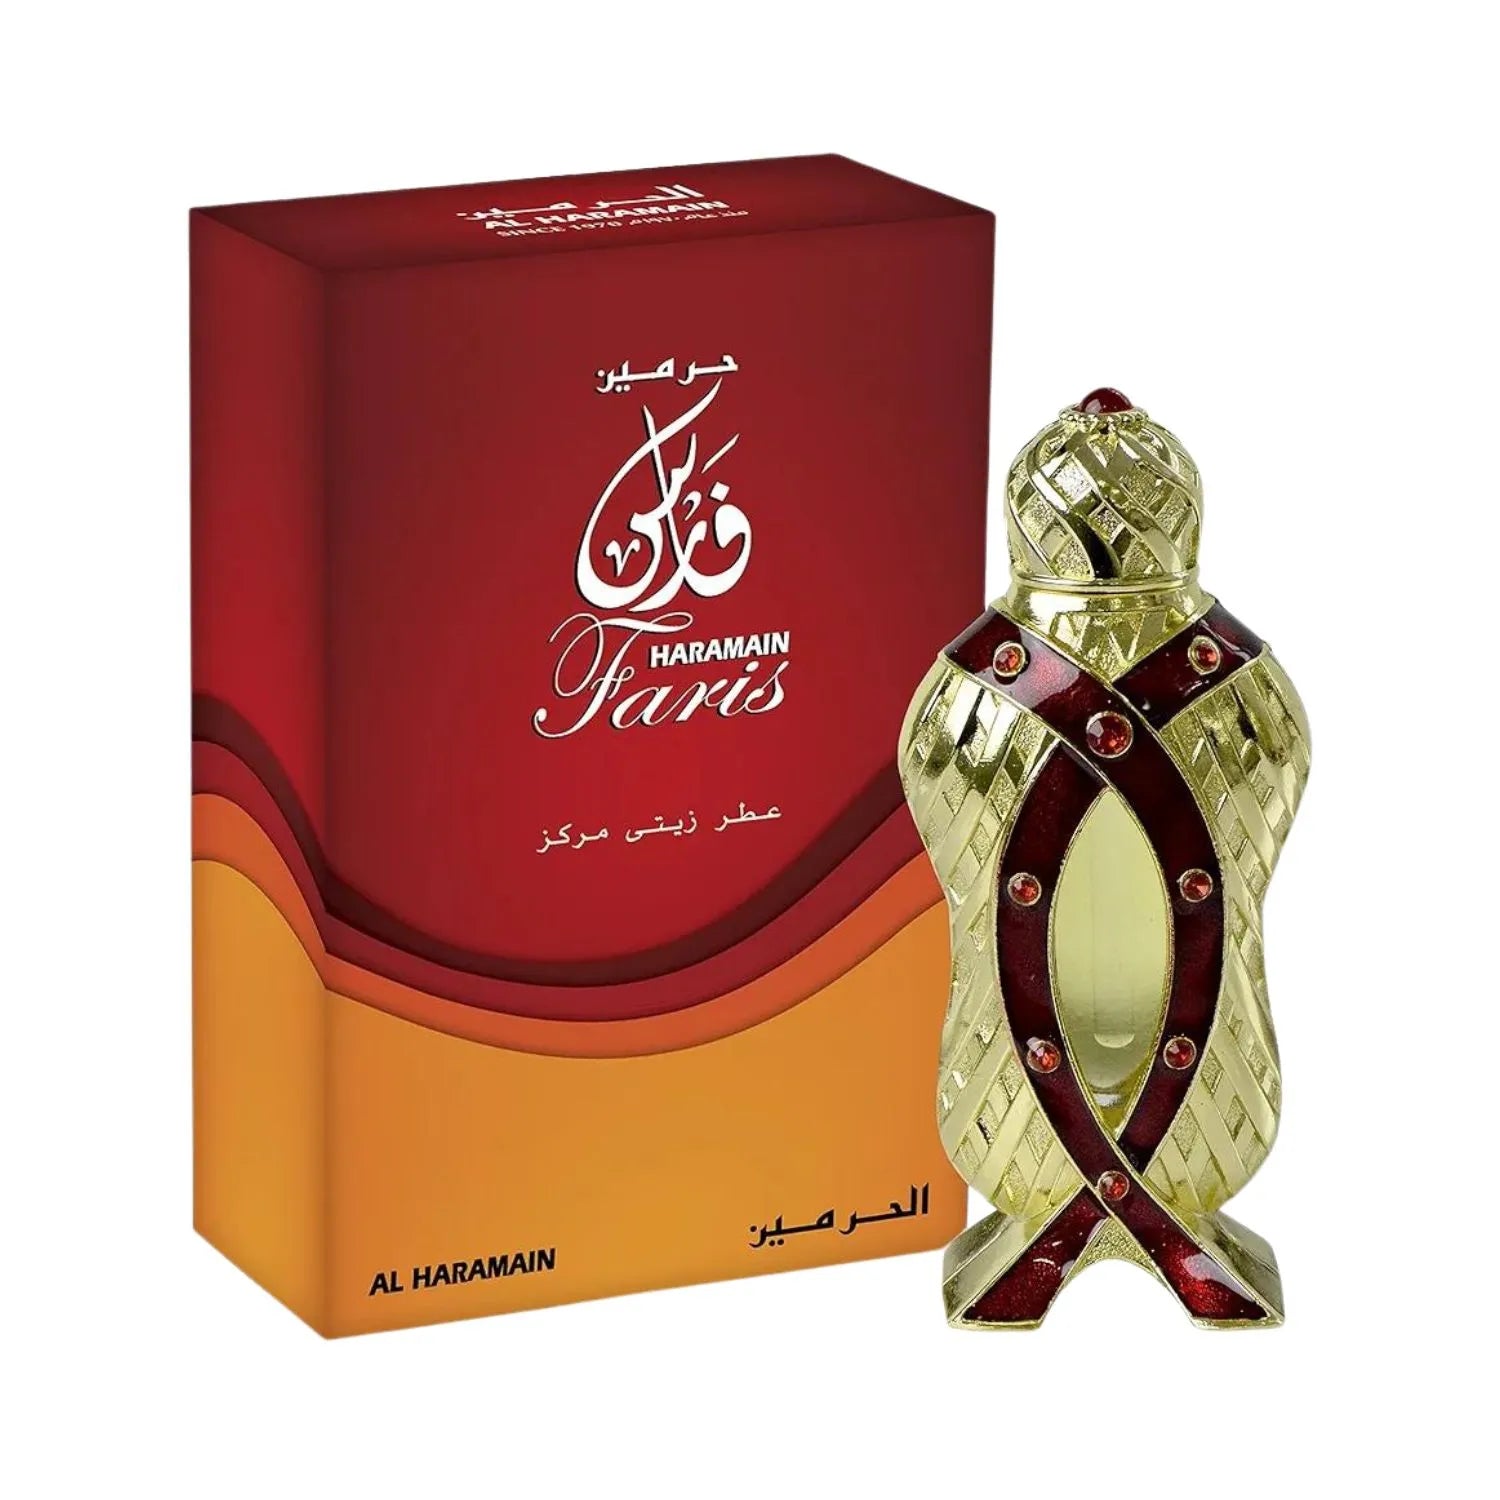 Faris Perfume Oil Box